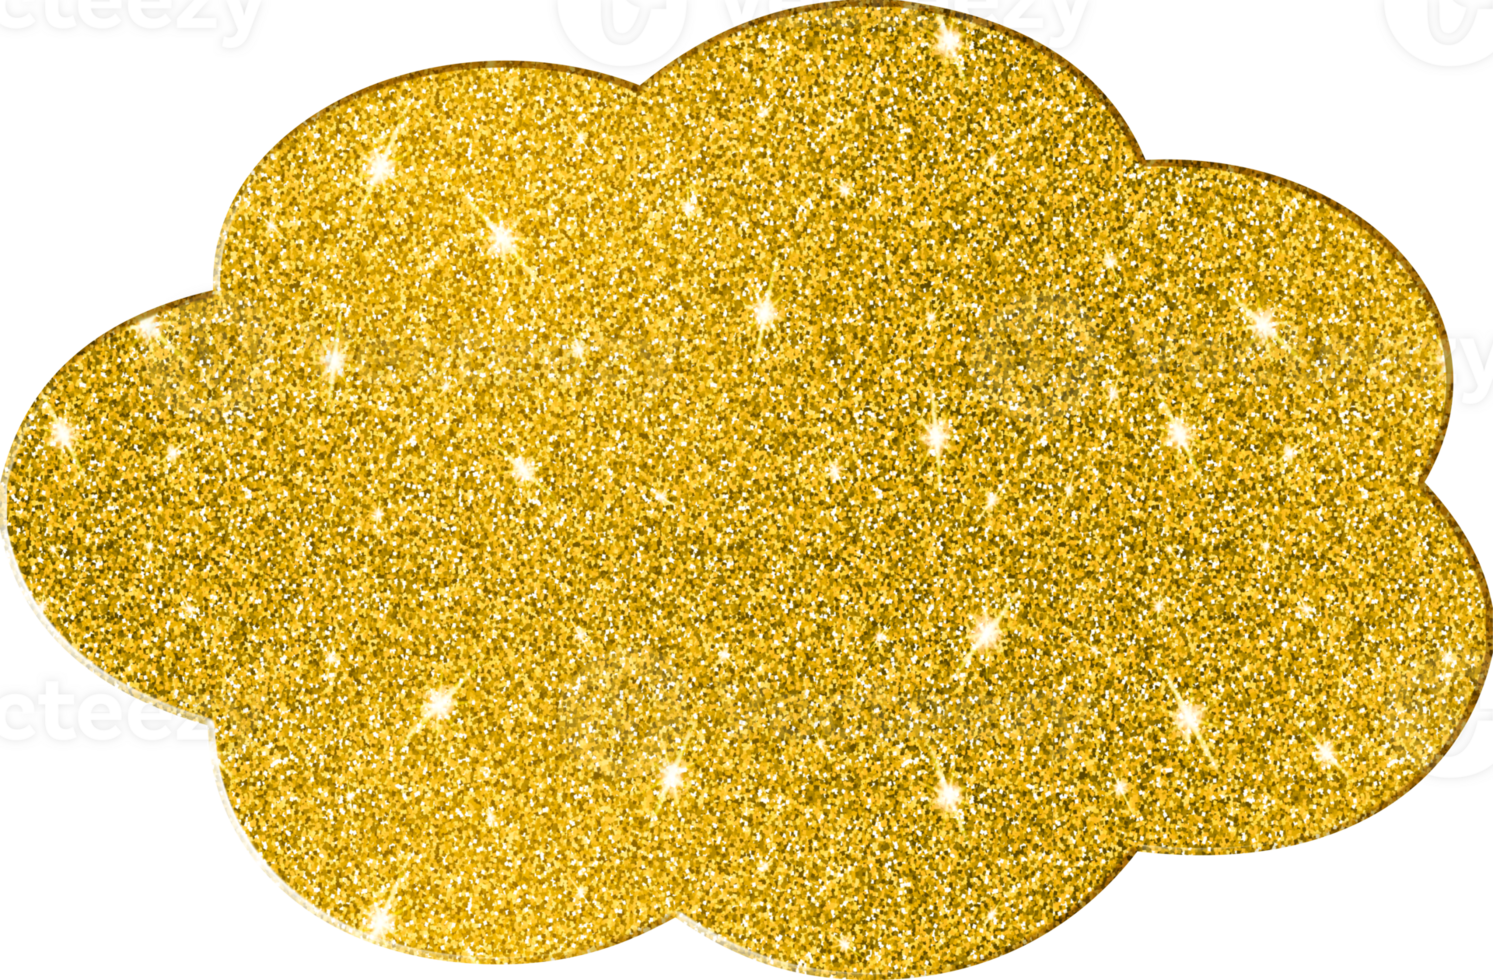 nuvem forma ouro brilhar 3d Prêmio elegante espumante decorativo brilhante chique básico formas png